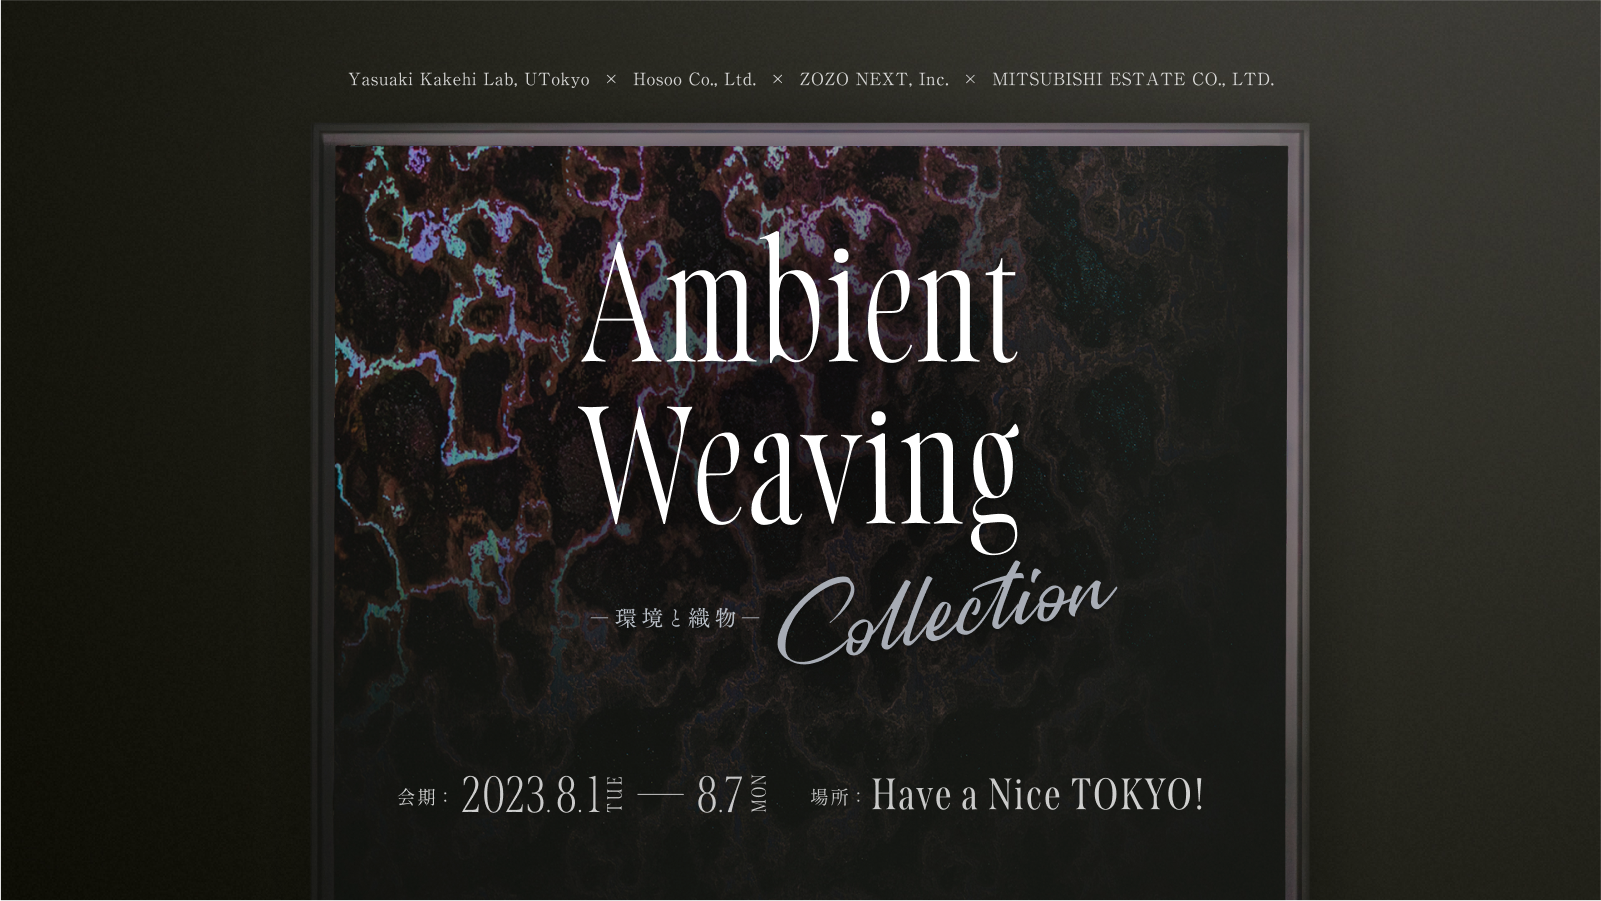 ZOZO NEXT・東京大学・細尾の共同プロジェクトによる作品展示会"Ambient Weaving Collection --環境と織物"を三菱地所運営の東京・丸の内「HaNT」にて8月1日より開催